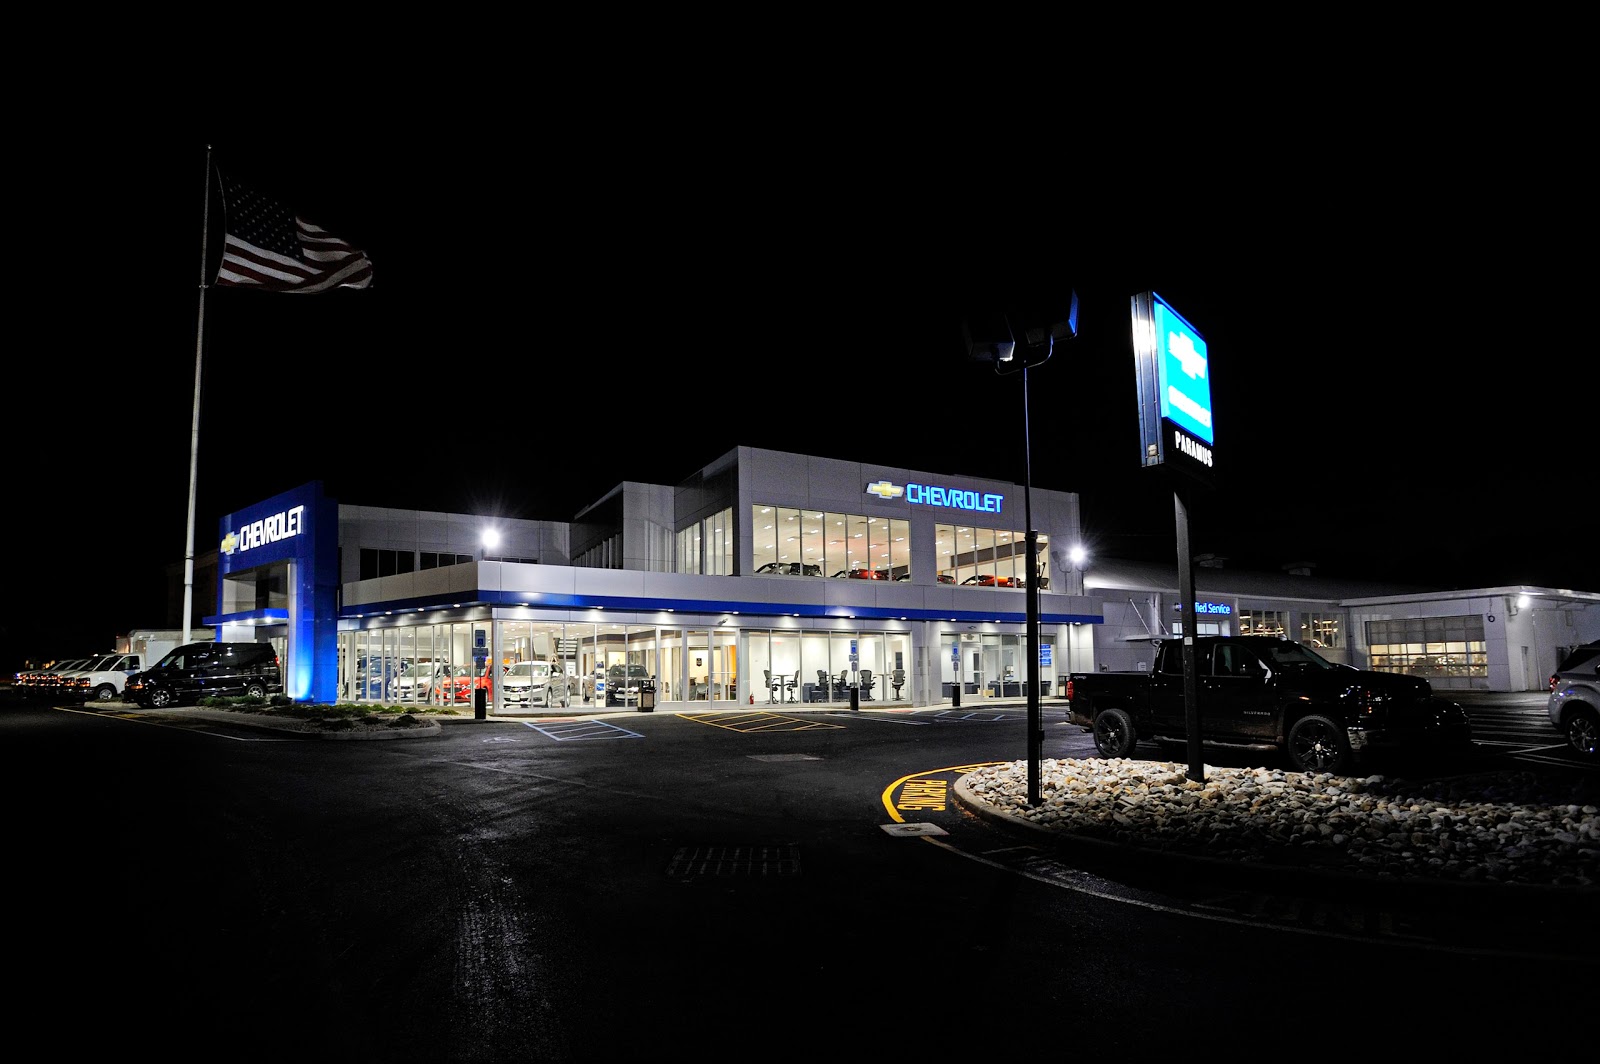 Photo of Paramus Chevrolet in Paramus City, New Jersey, United States - 6 Picture of Point of interest, Establishment, Car dealer, Store, Car repair